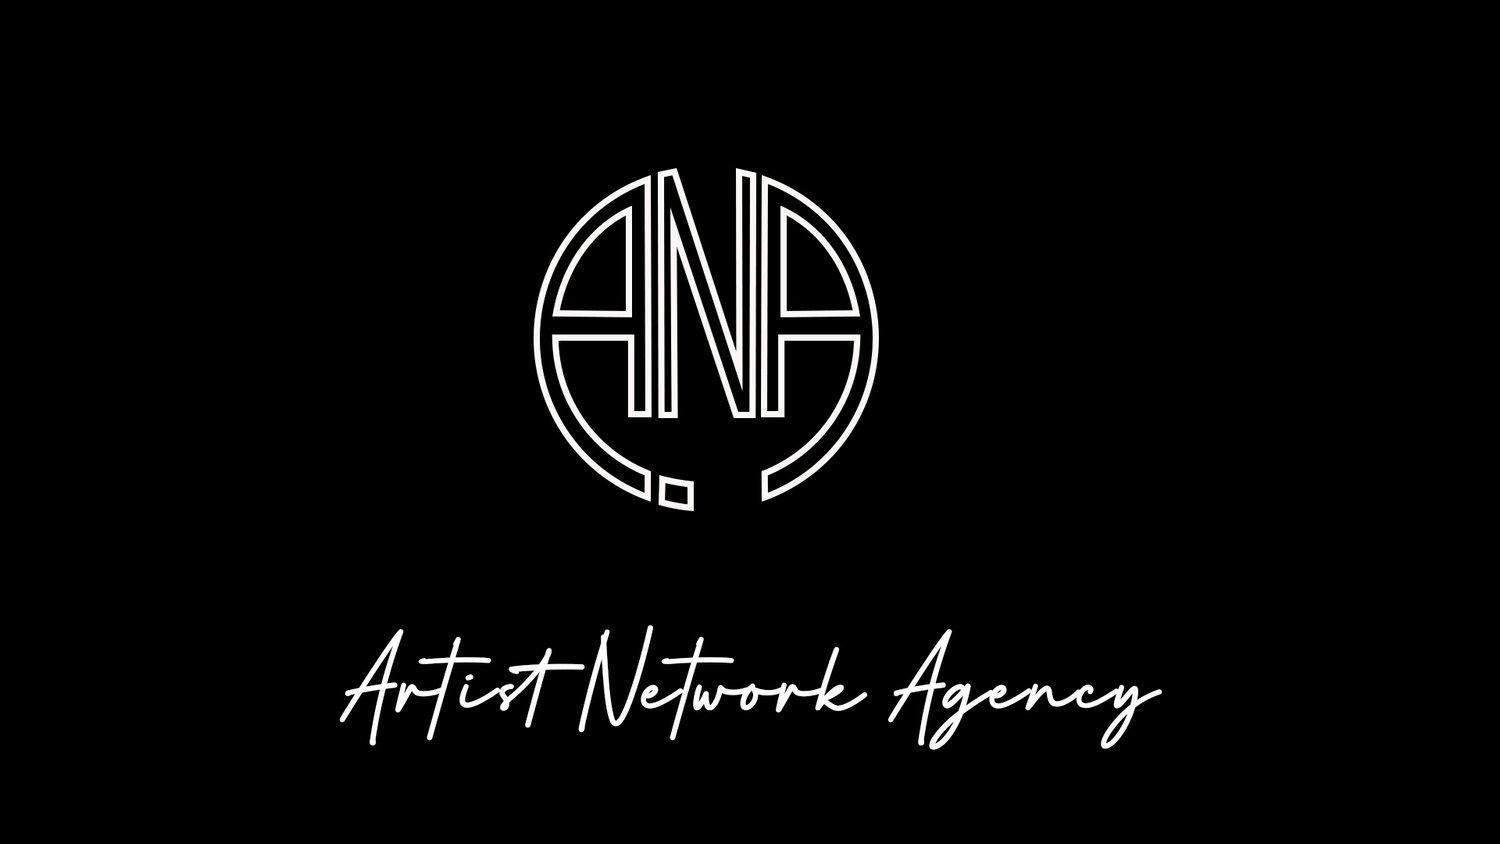 The Artist Network Agency